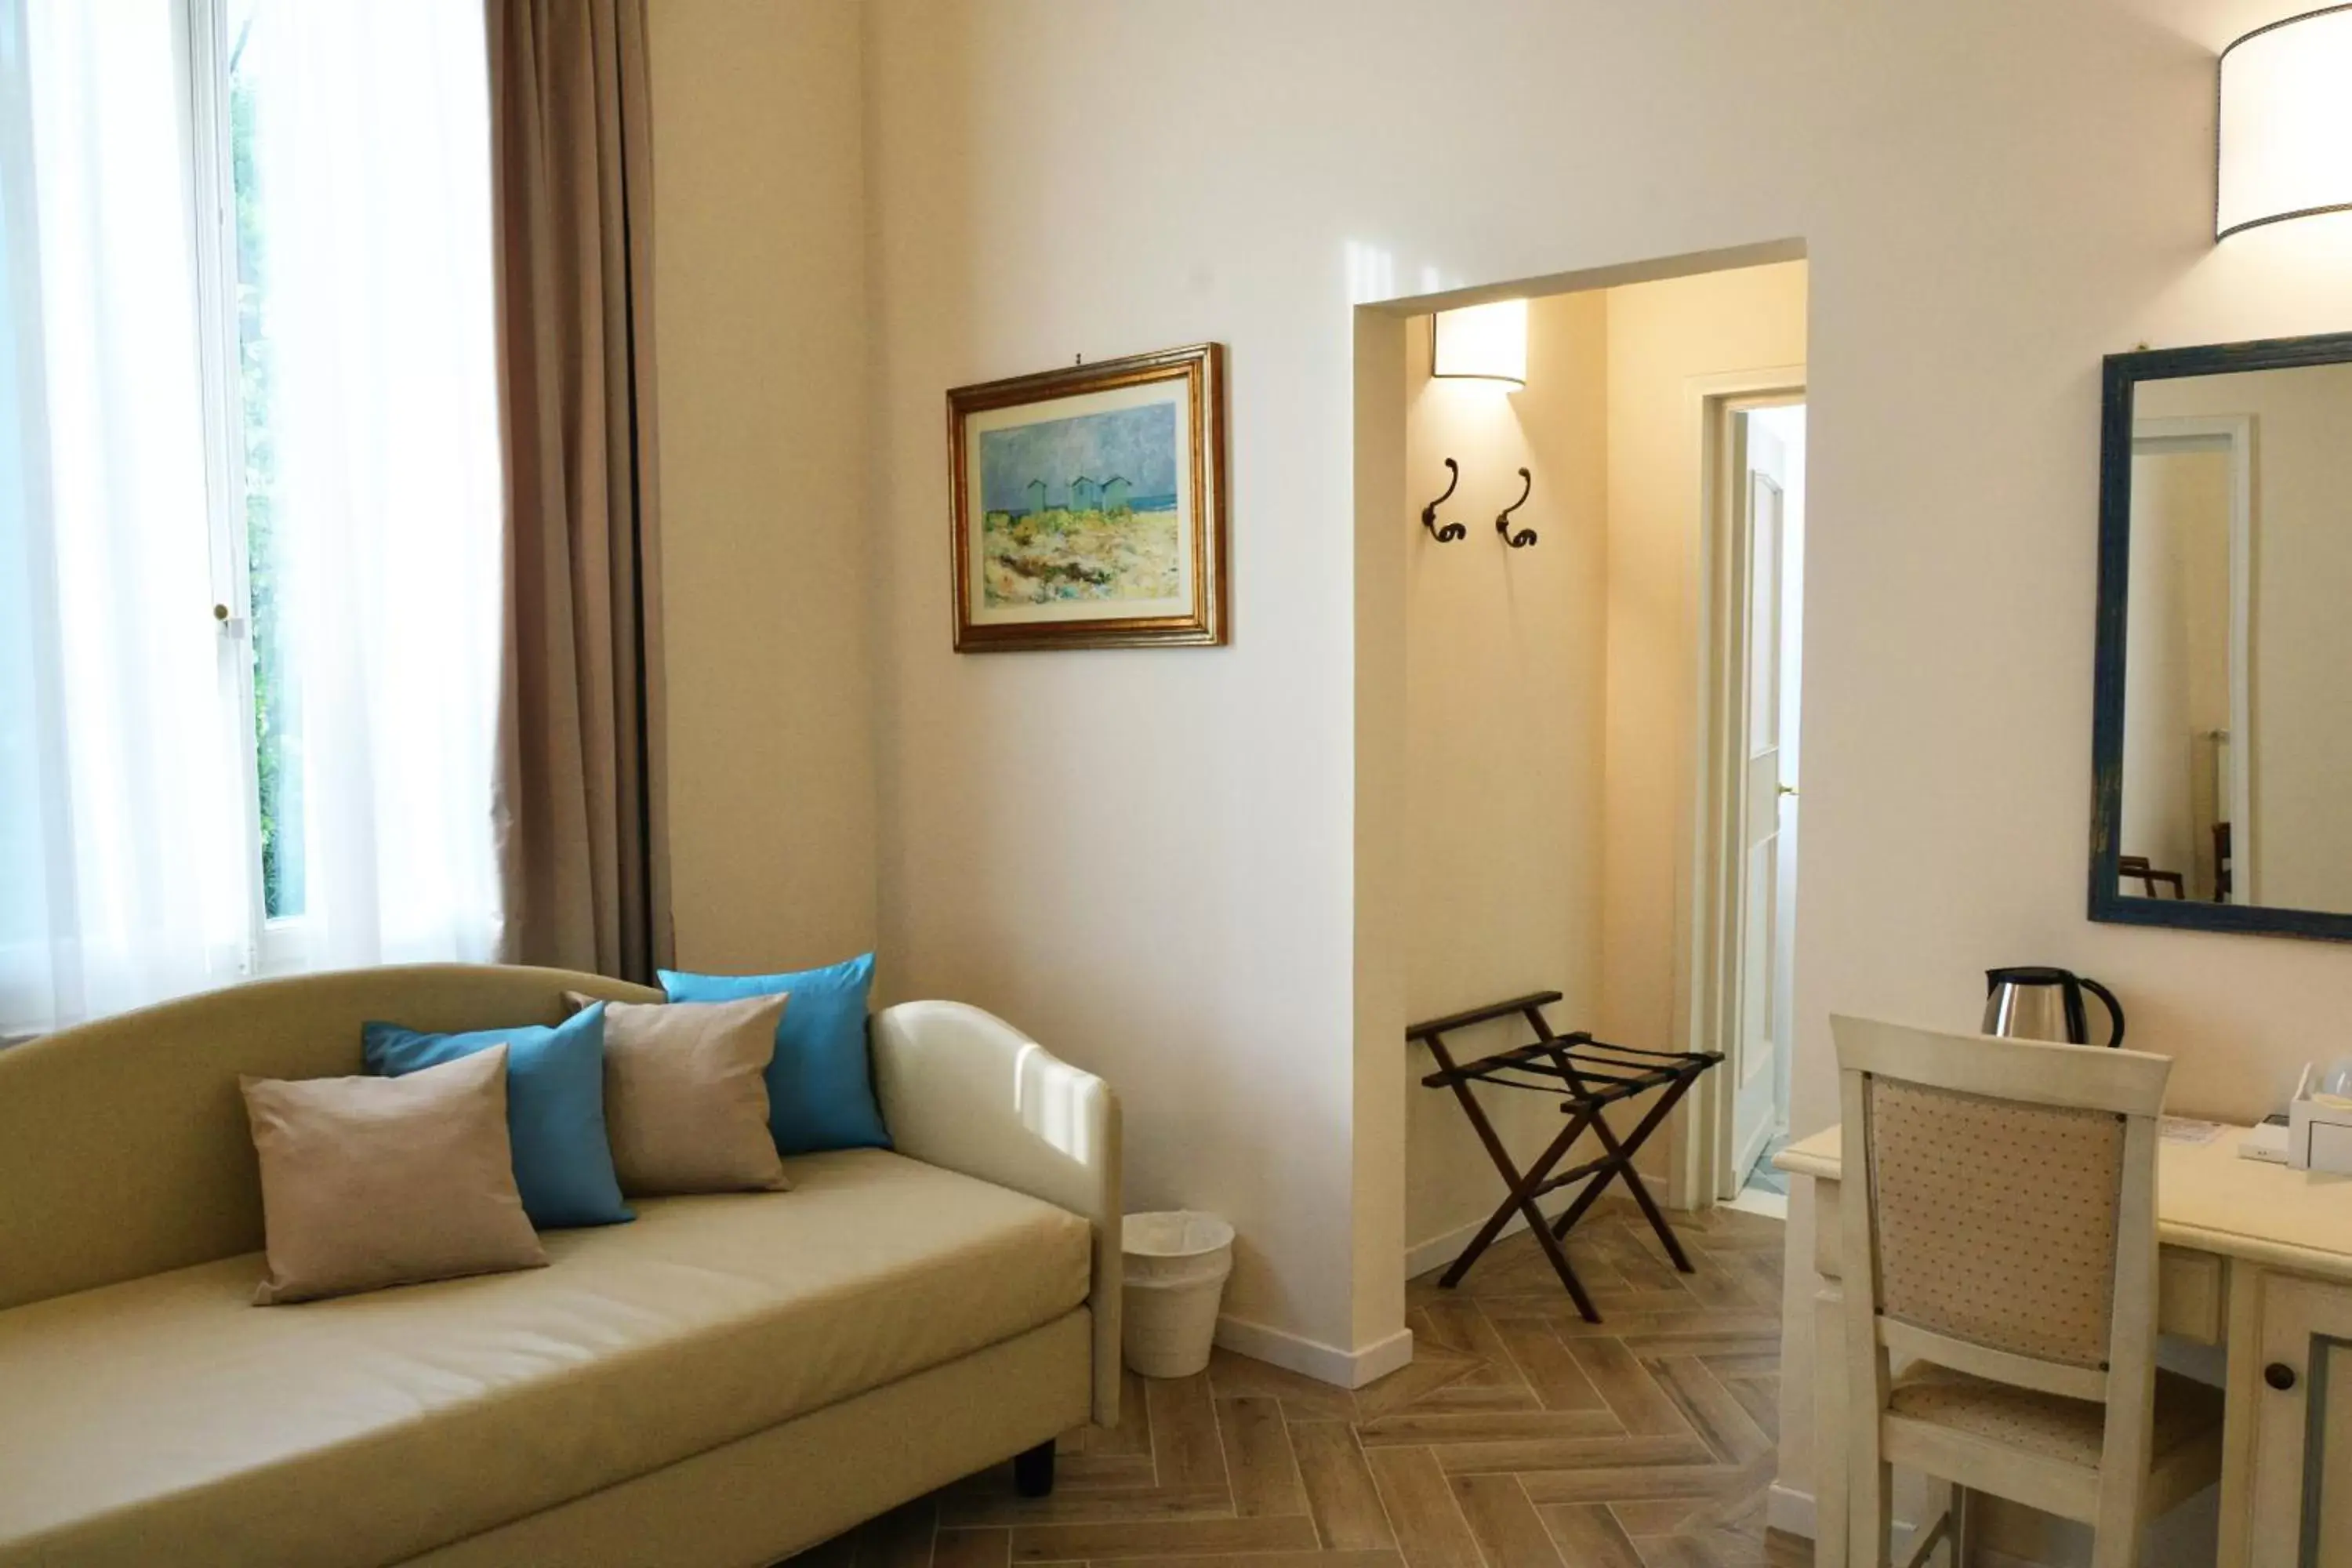 Photo of the whole room, Seating Area in Dimora Salviati